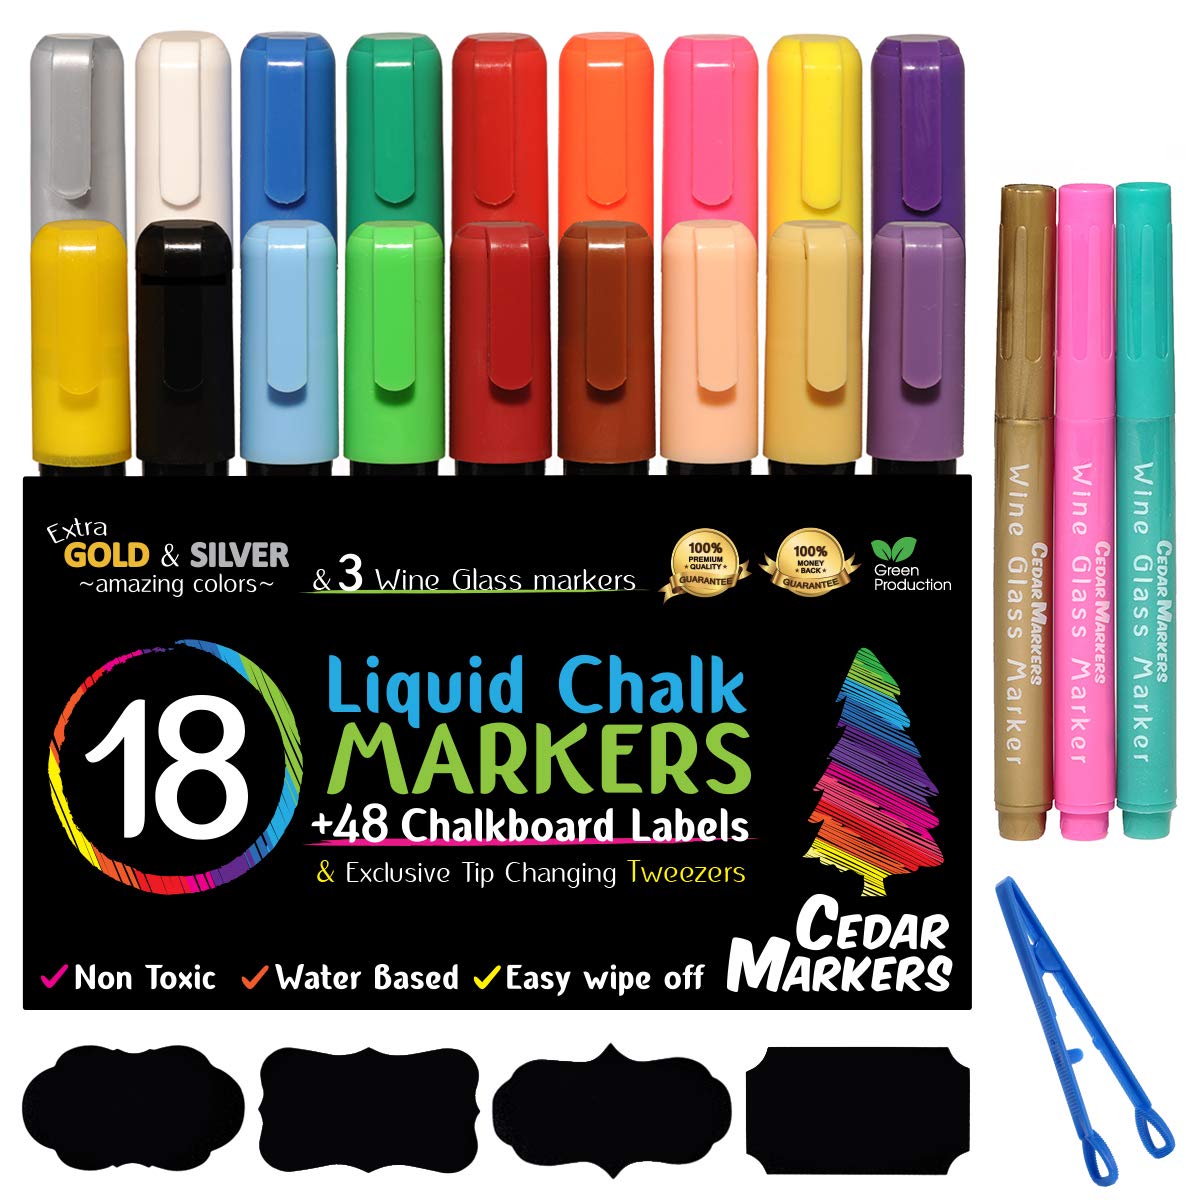 Cedar Markers Liquid Chalk Markers - 18 Pack …